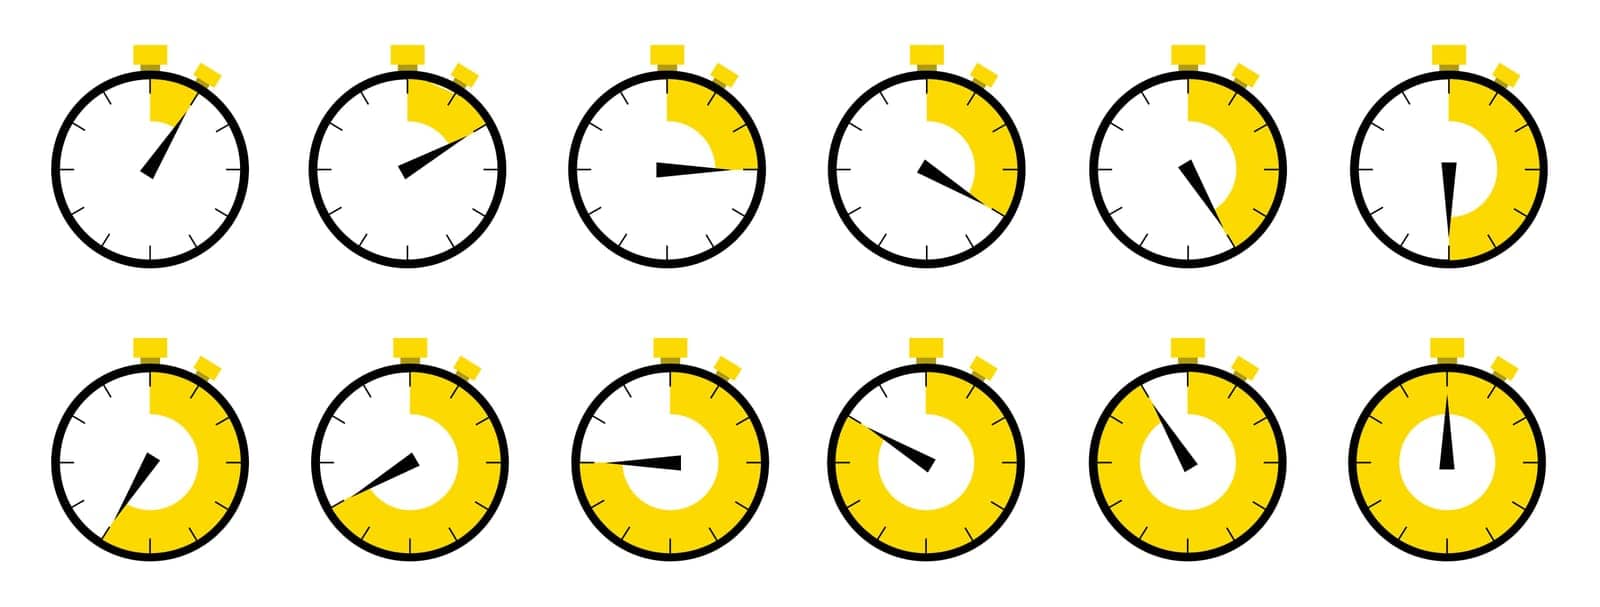 Horizontal set of analog clock icon.